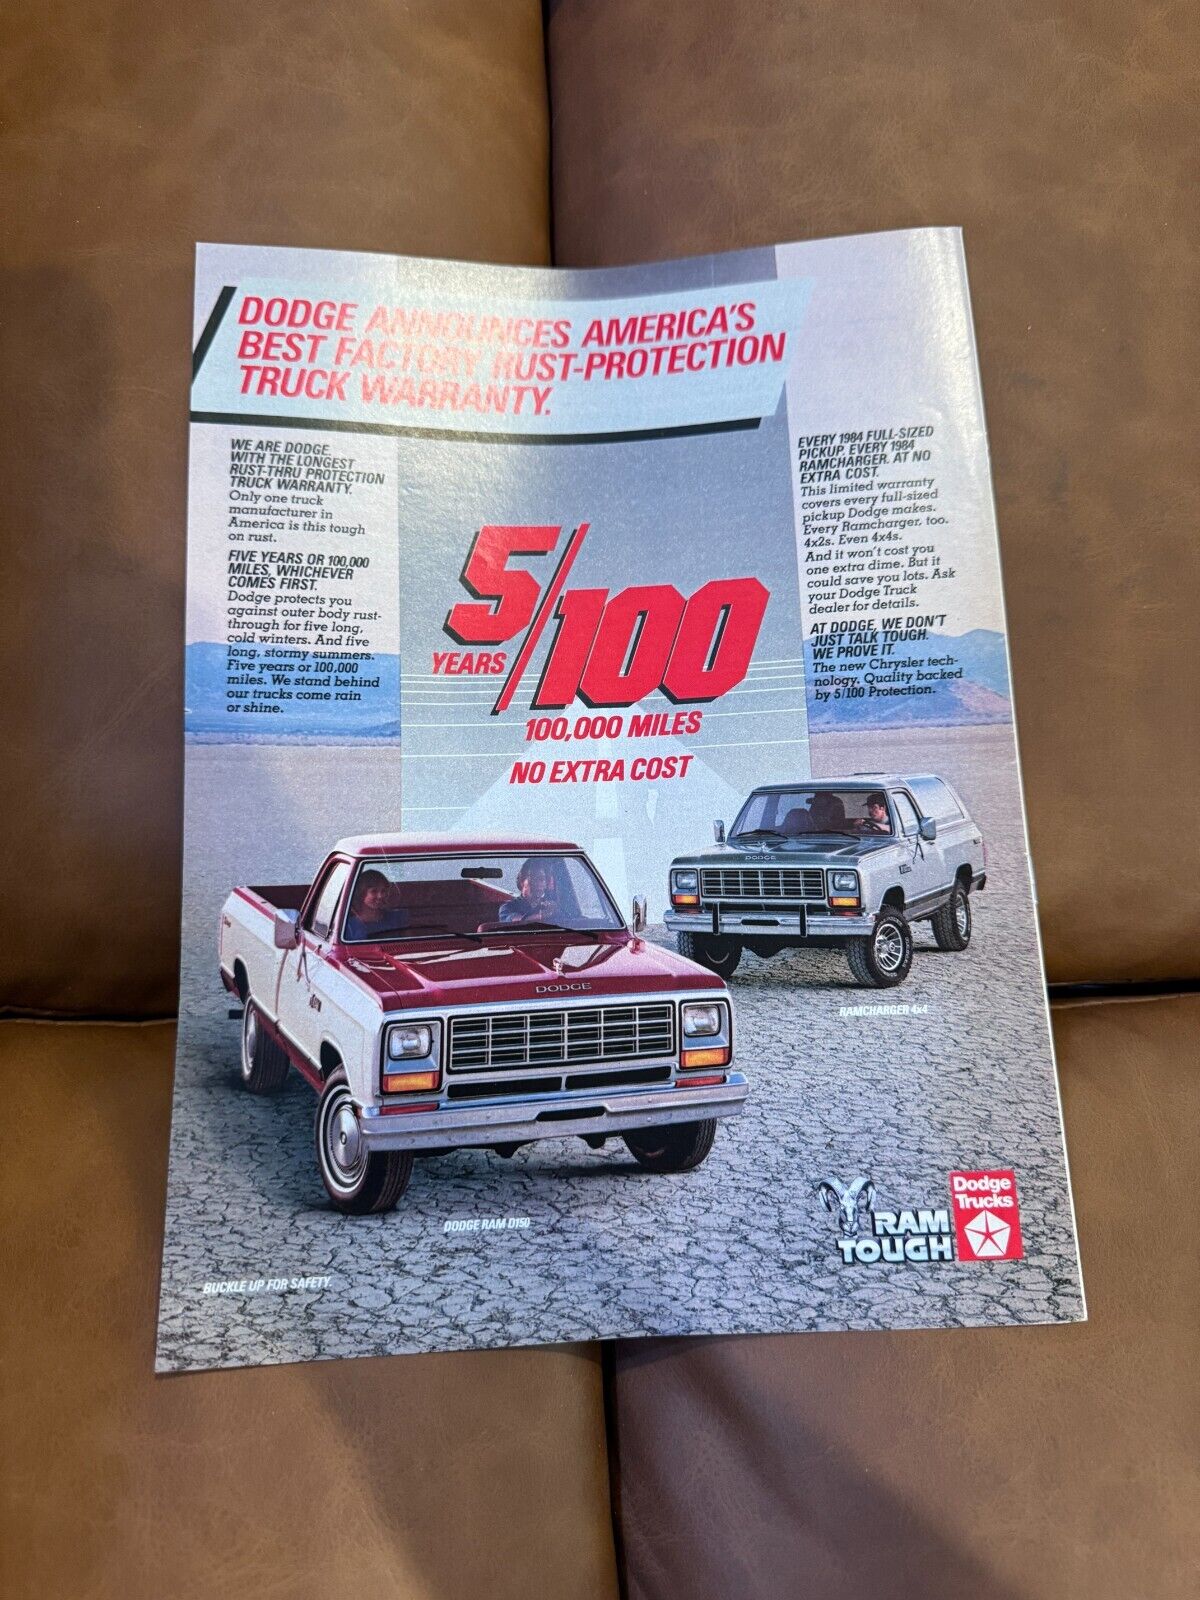 Dodge Ram Trucks 5 Years 100,000 Miles Warranty Vintage 1980's Print Ad